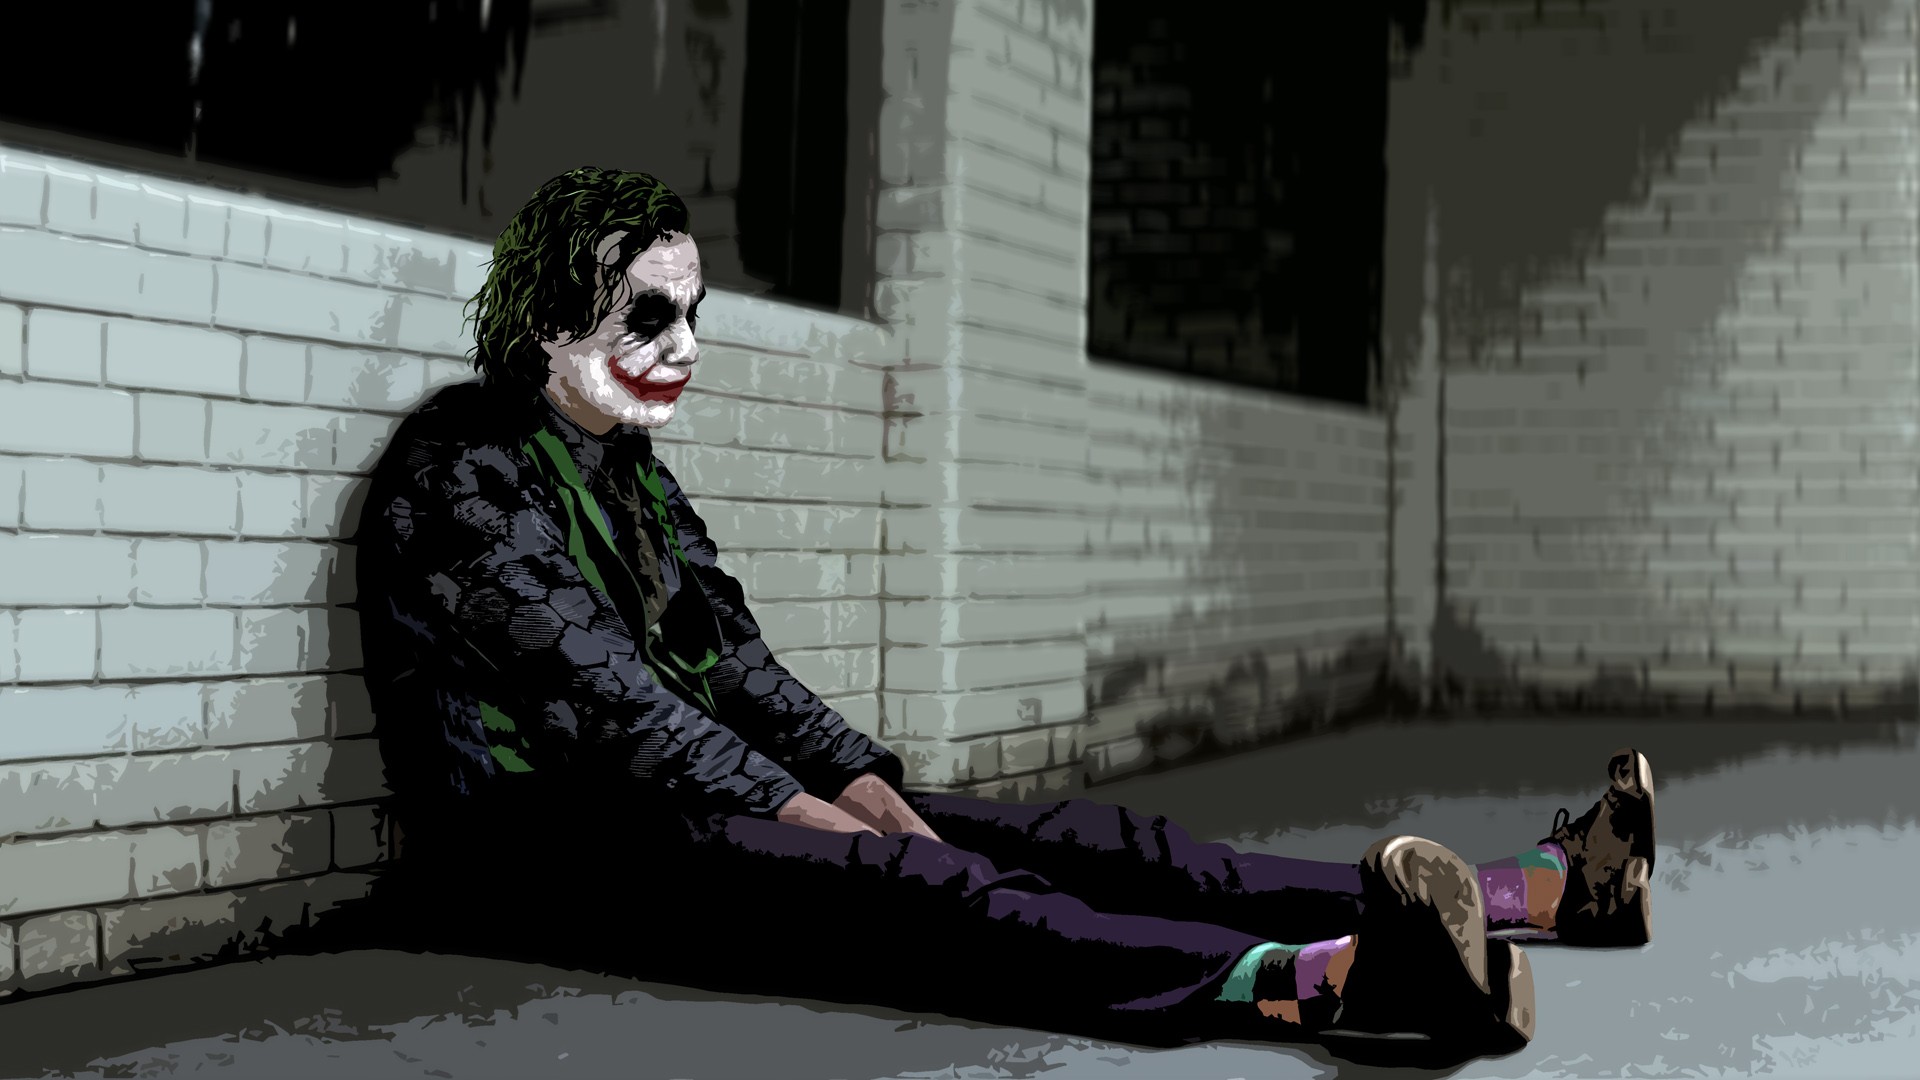 General 1920x1080 movies anime Batman The Dark Knight Joker MessenjahMatt prison Heath Ledger artwork villains